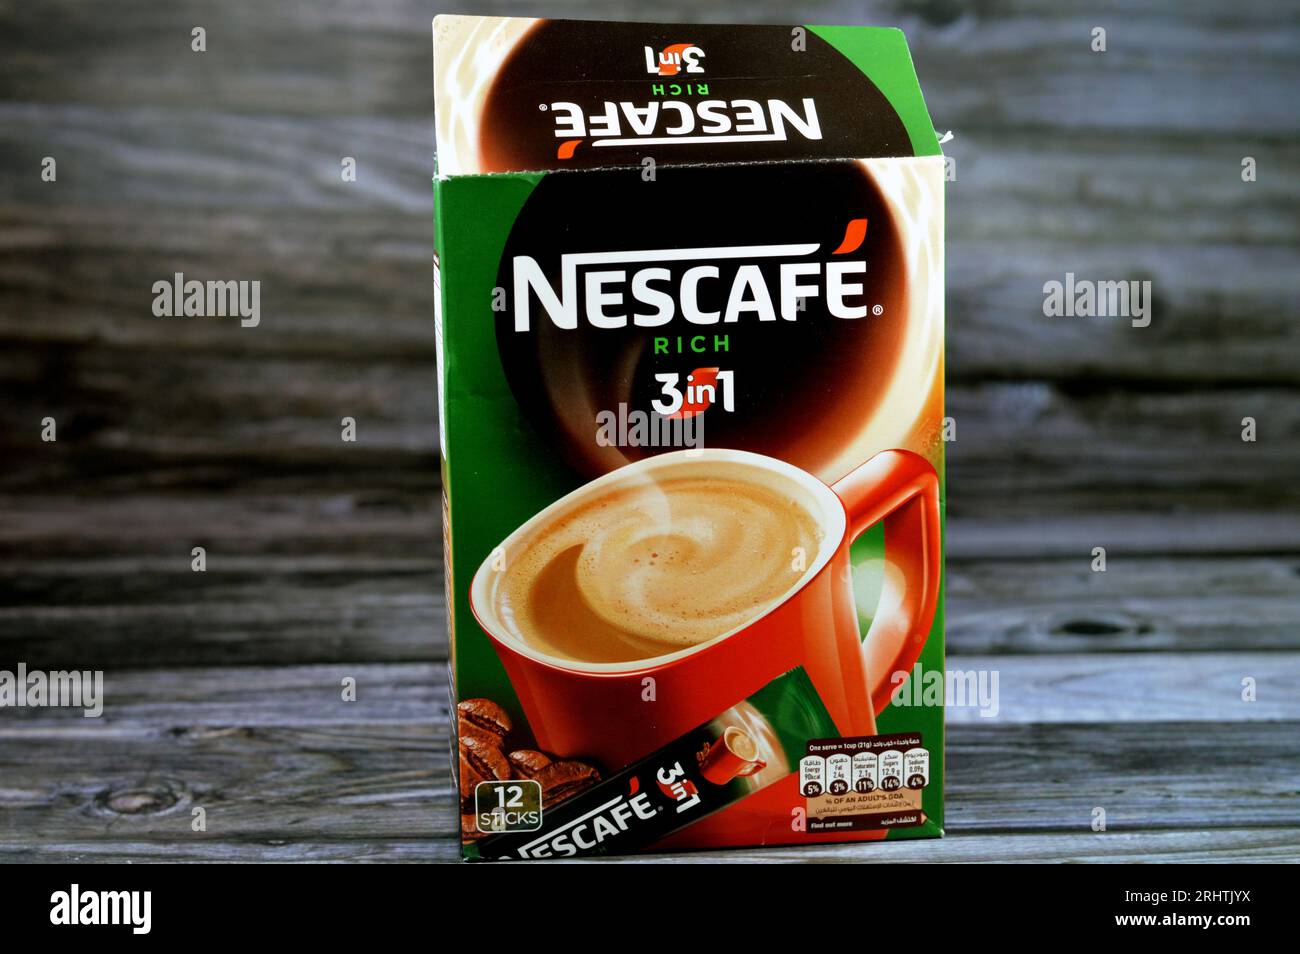 2 Packs Nescafe 3 in 1 Stronger taste than Original Nescafe 3 in 1 Rich  Instant Coffee Lebih Kaw Premix Coffee Serve in Cold or Hot 25 Sticks/25